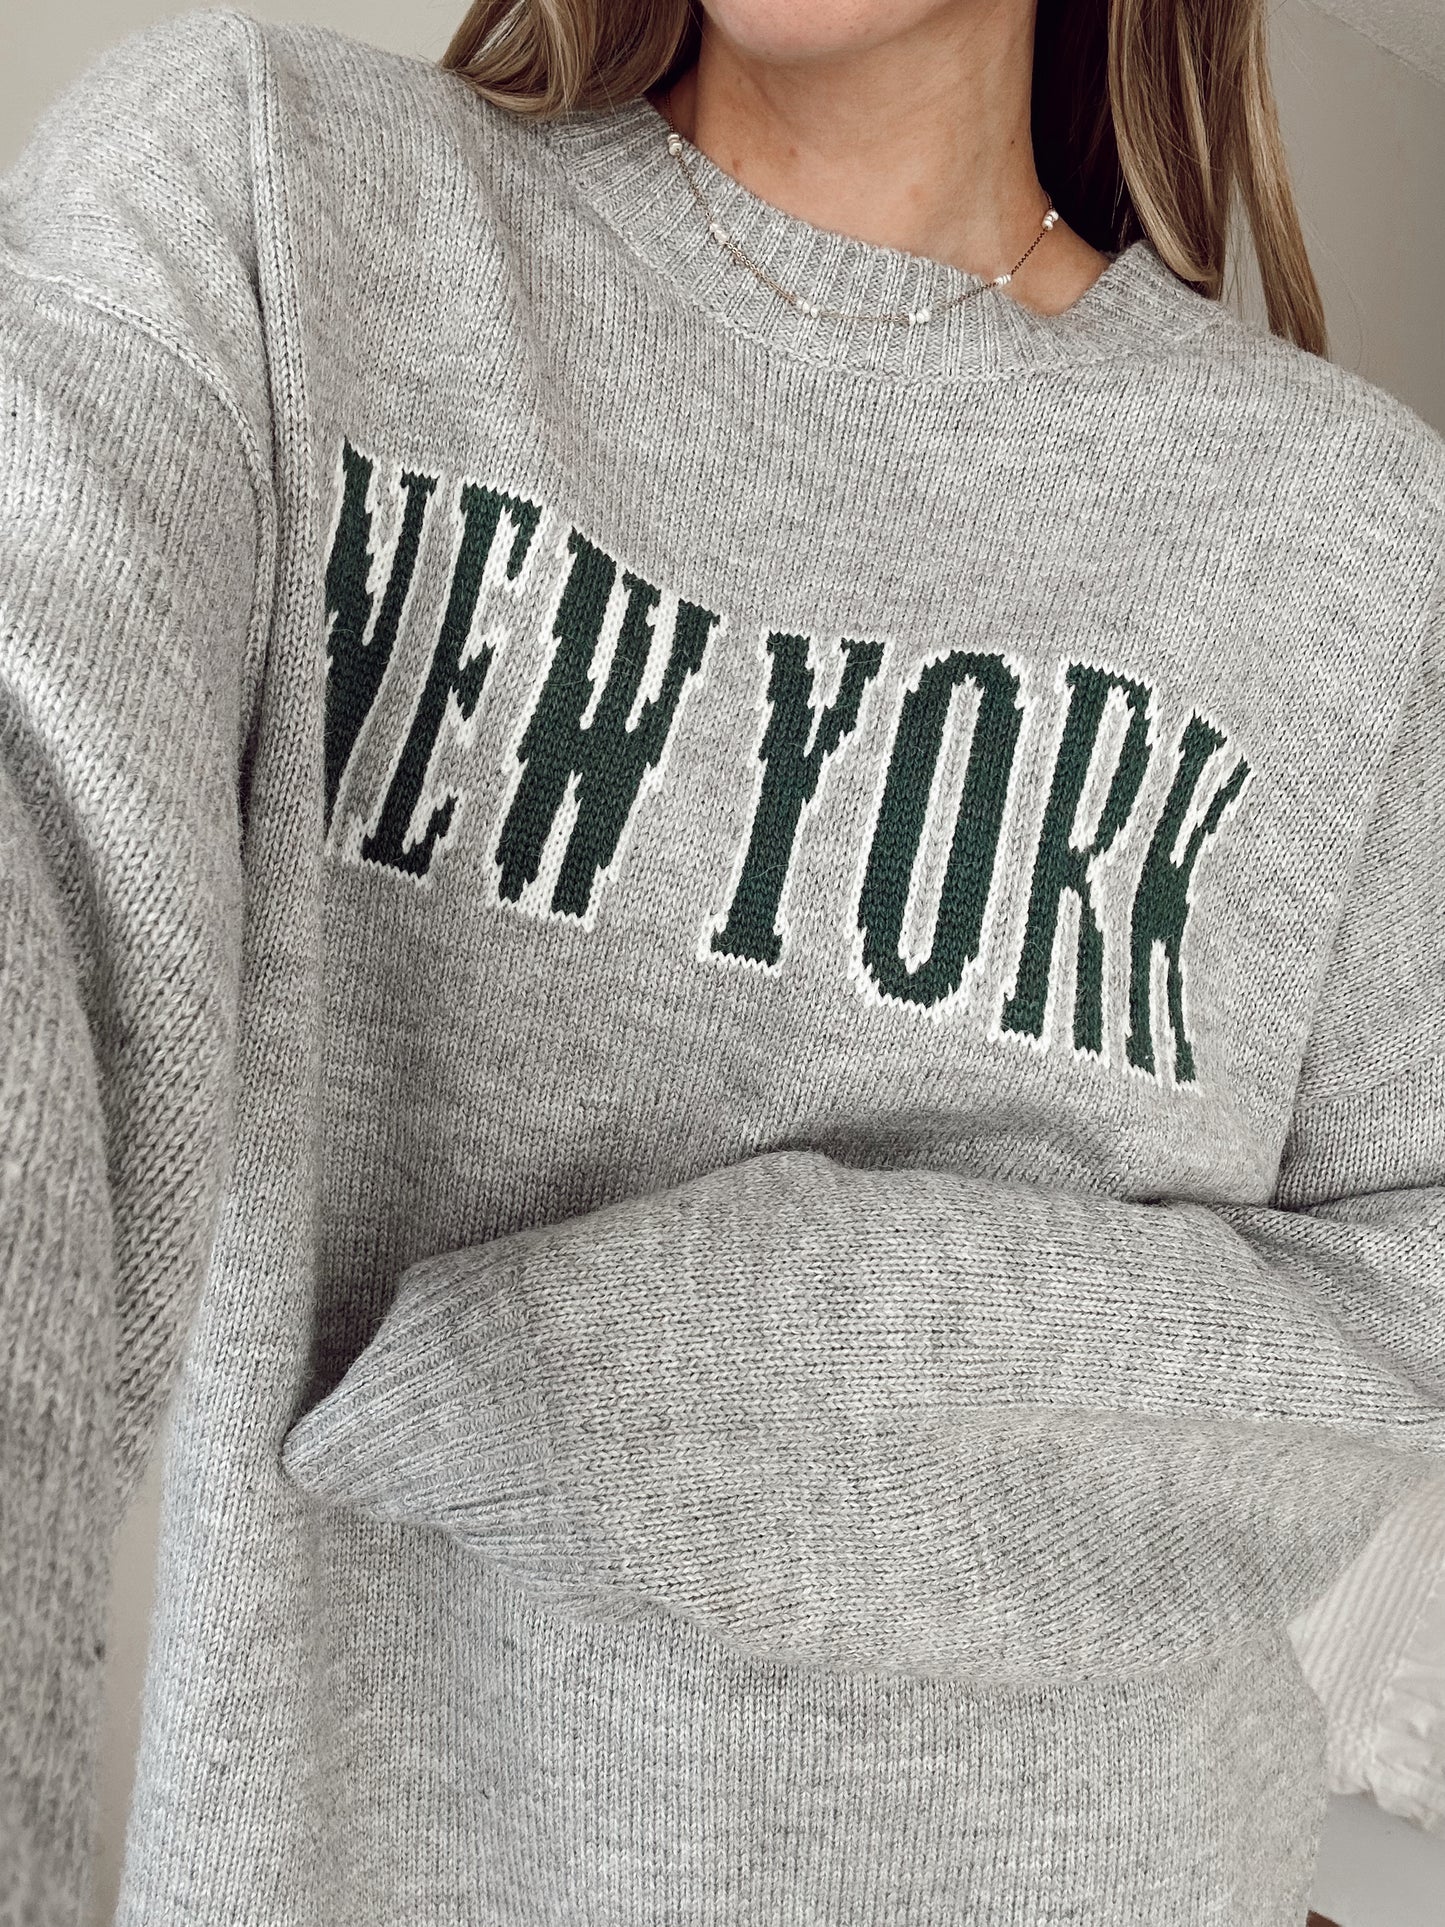 Brooklyn Baby Sweater